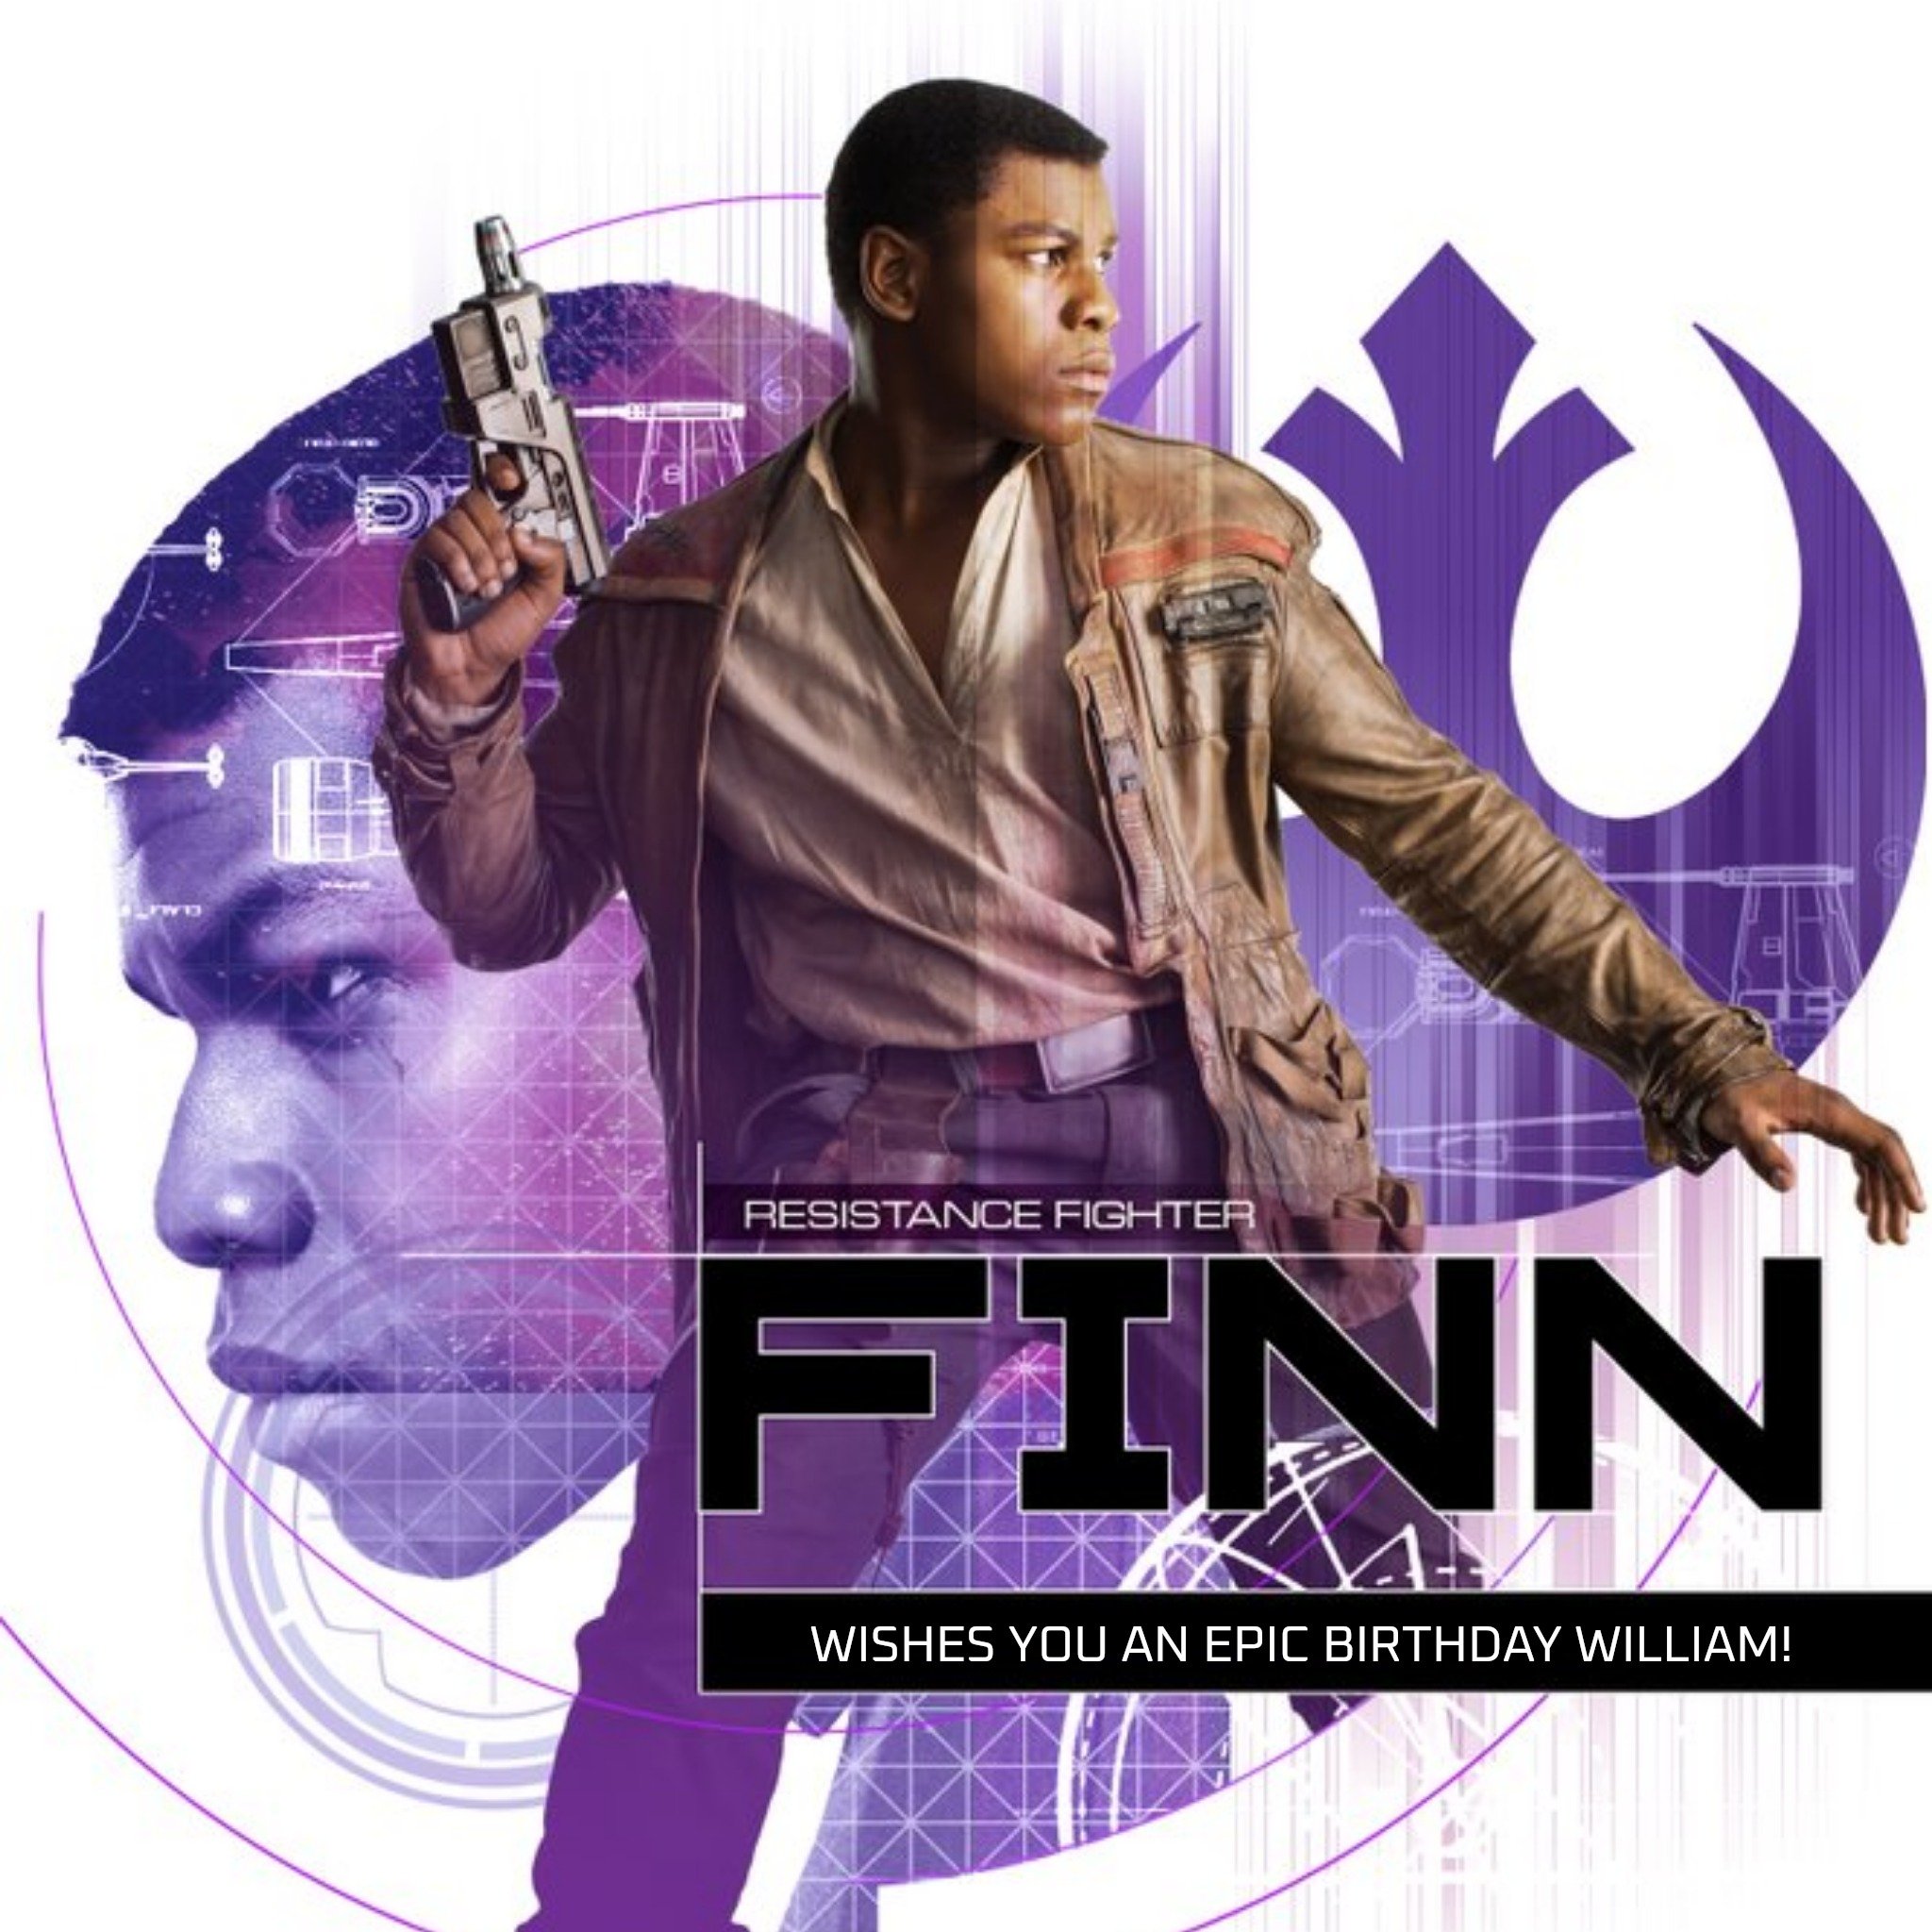 Disney Star Wars Finn Personalised Text Card, Square